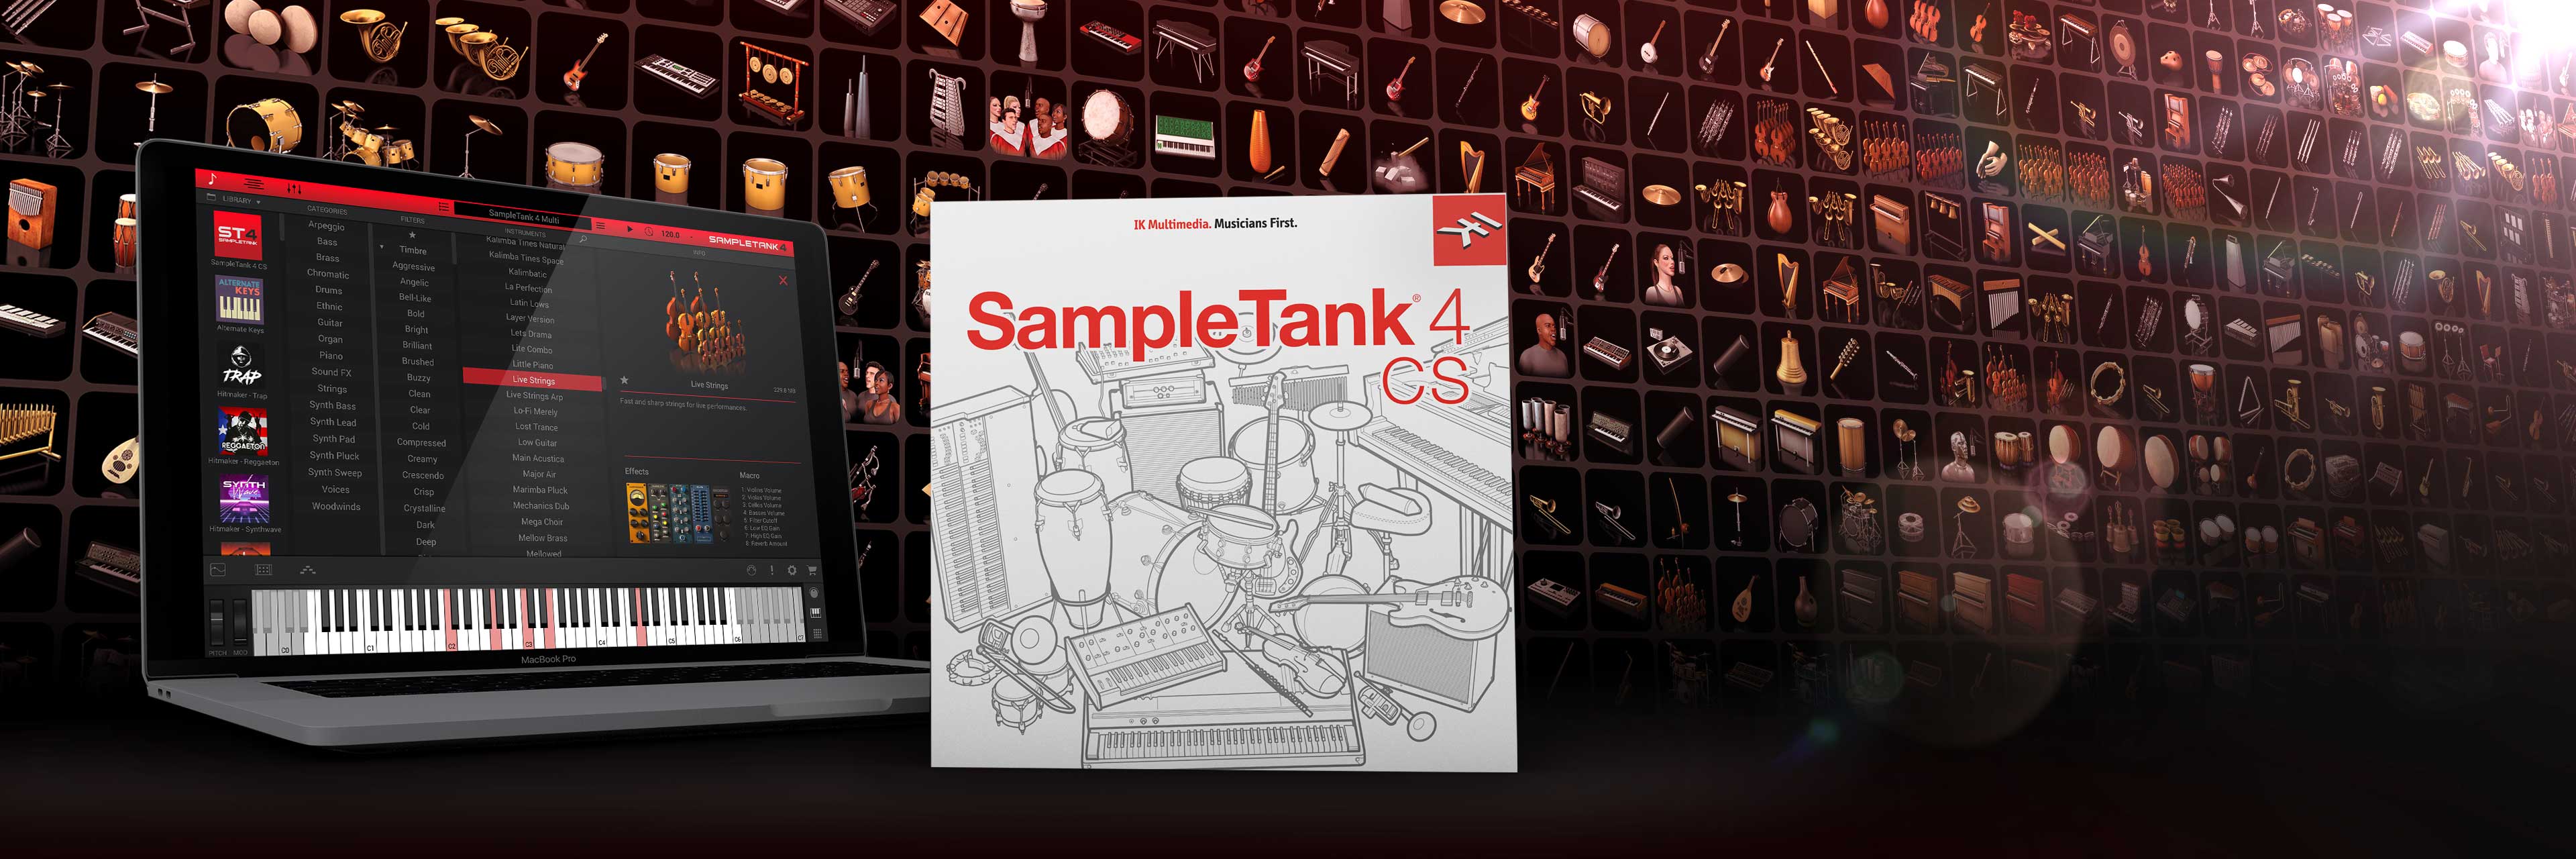 sampletank 4 review